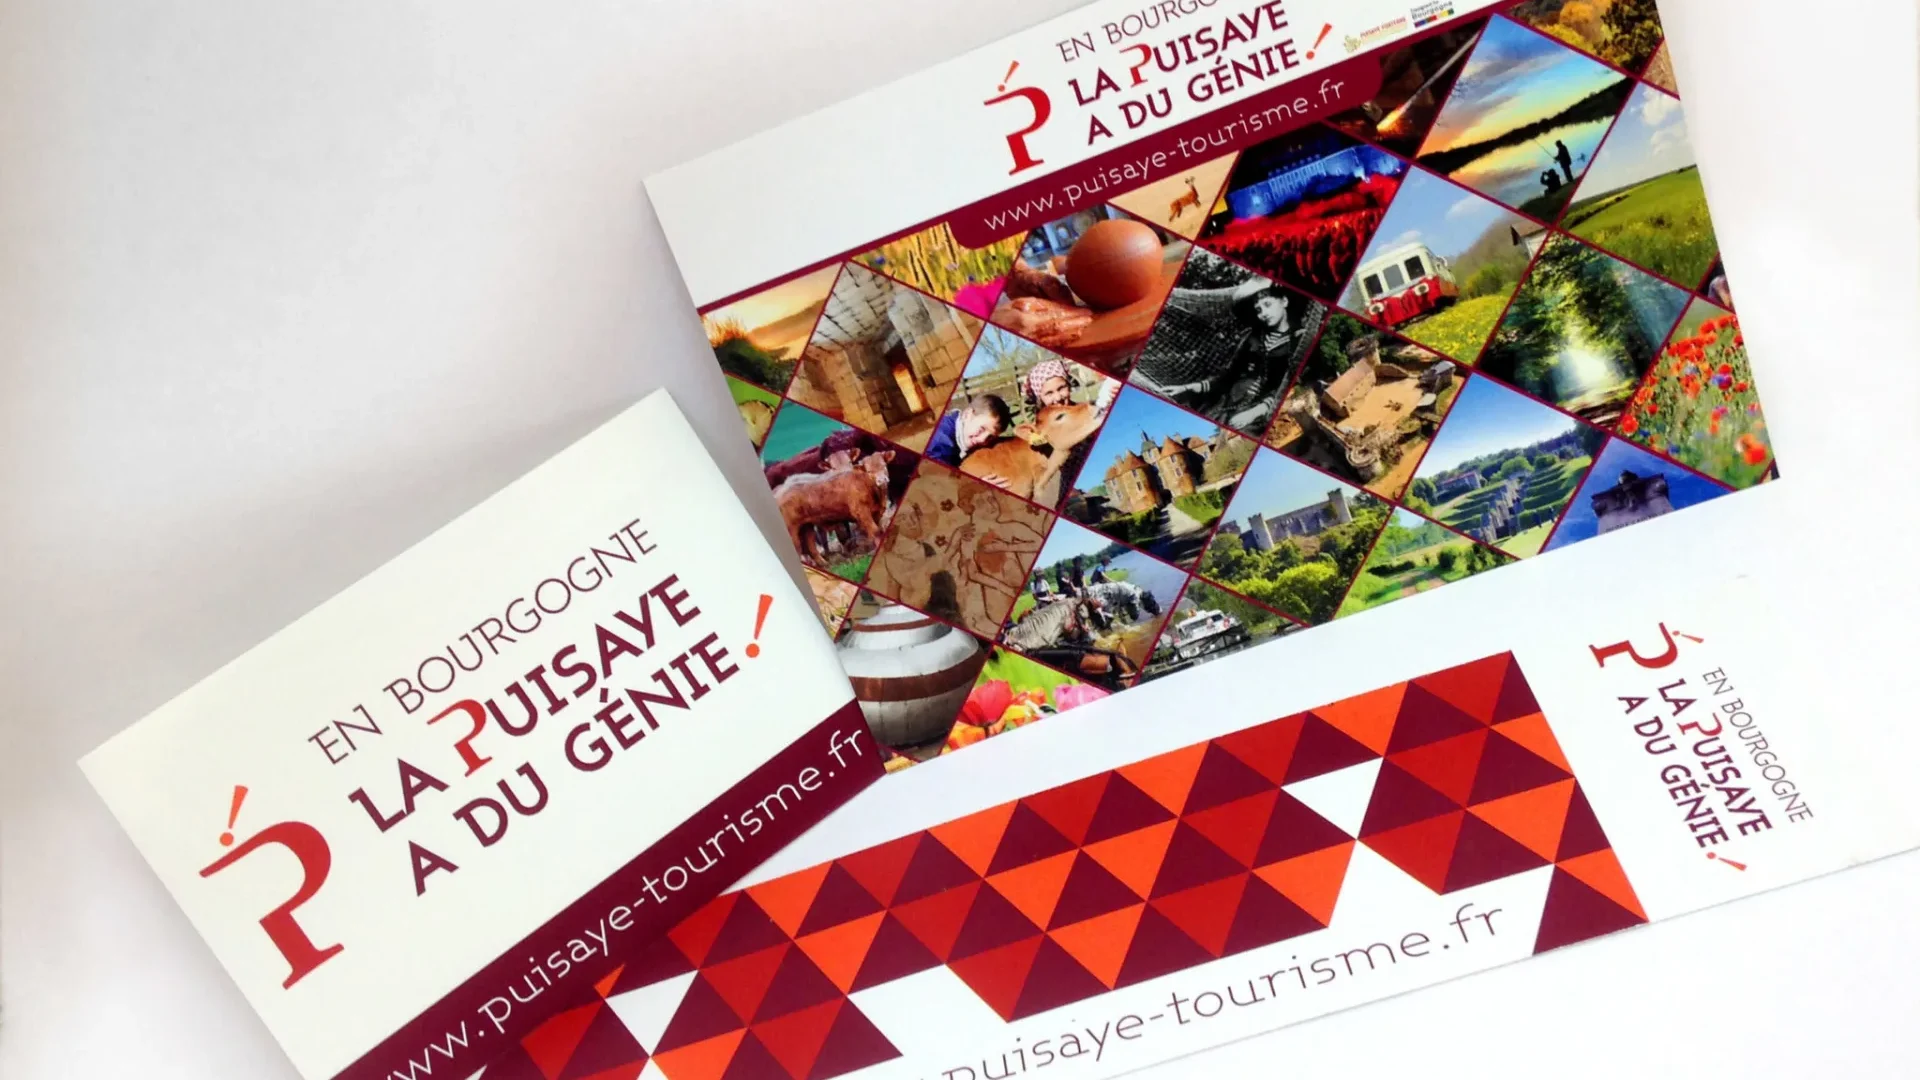 Brand and goodies “In Burgundy, Puisaye has genius”